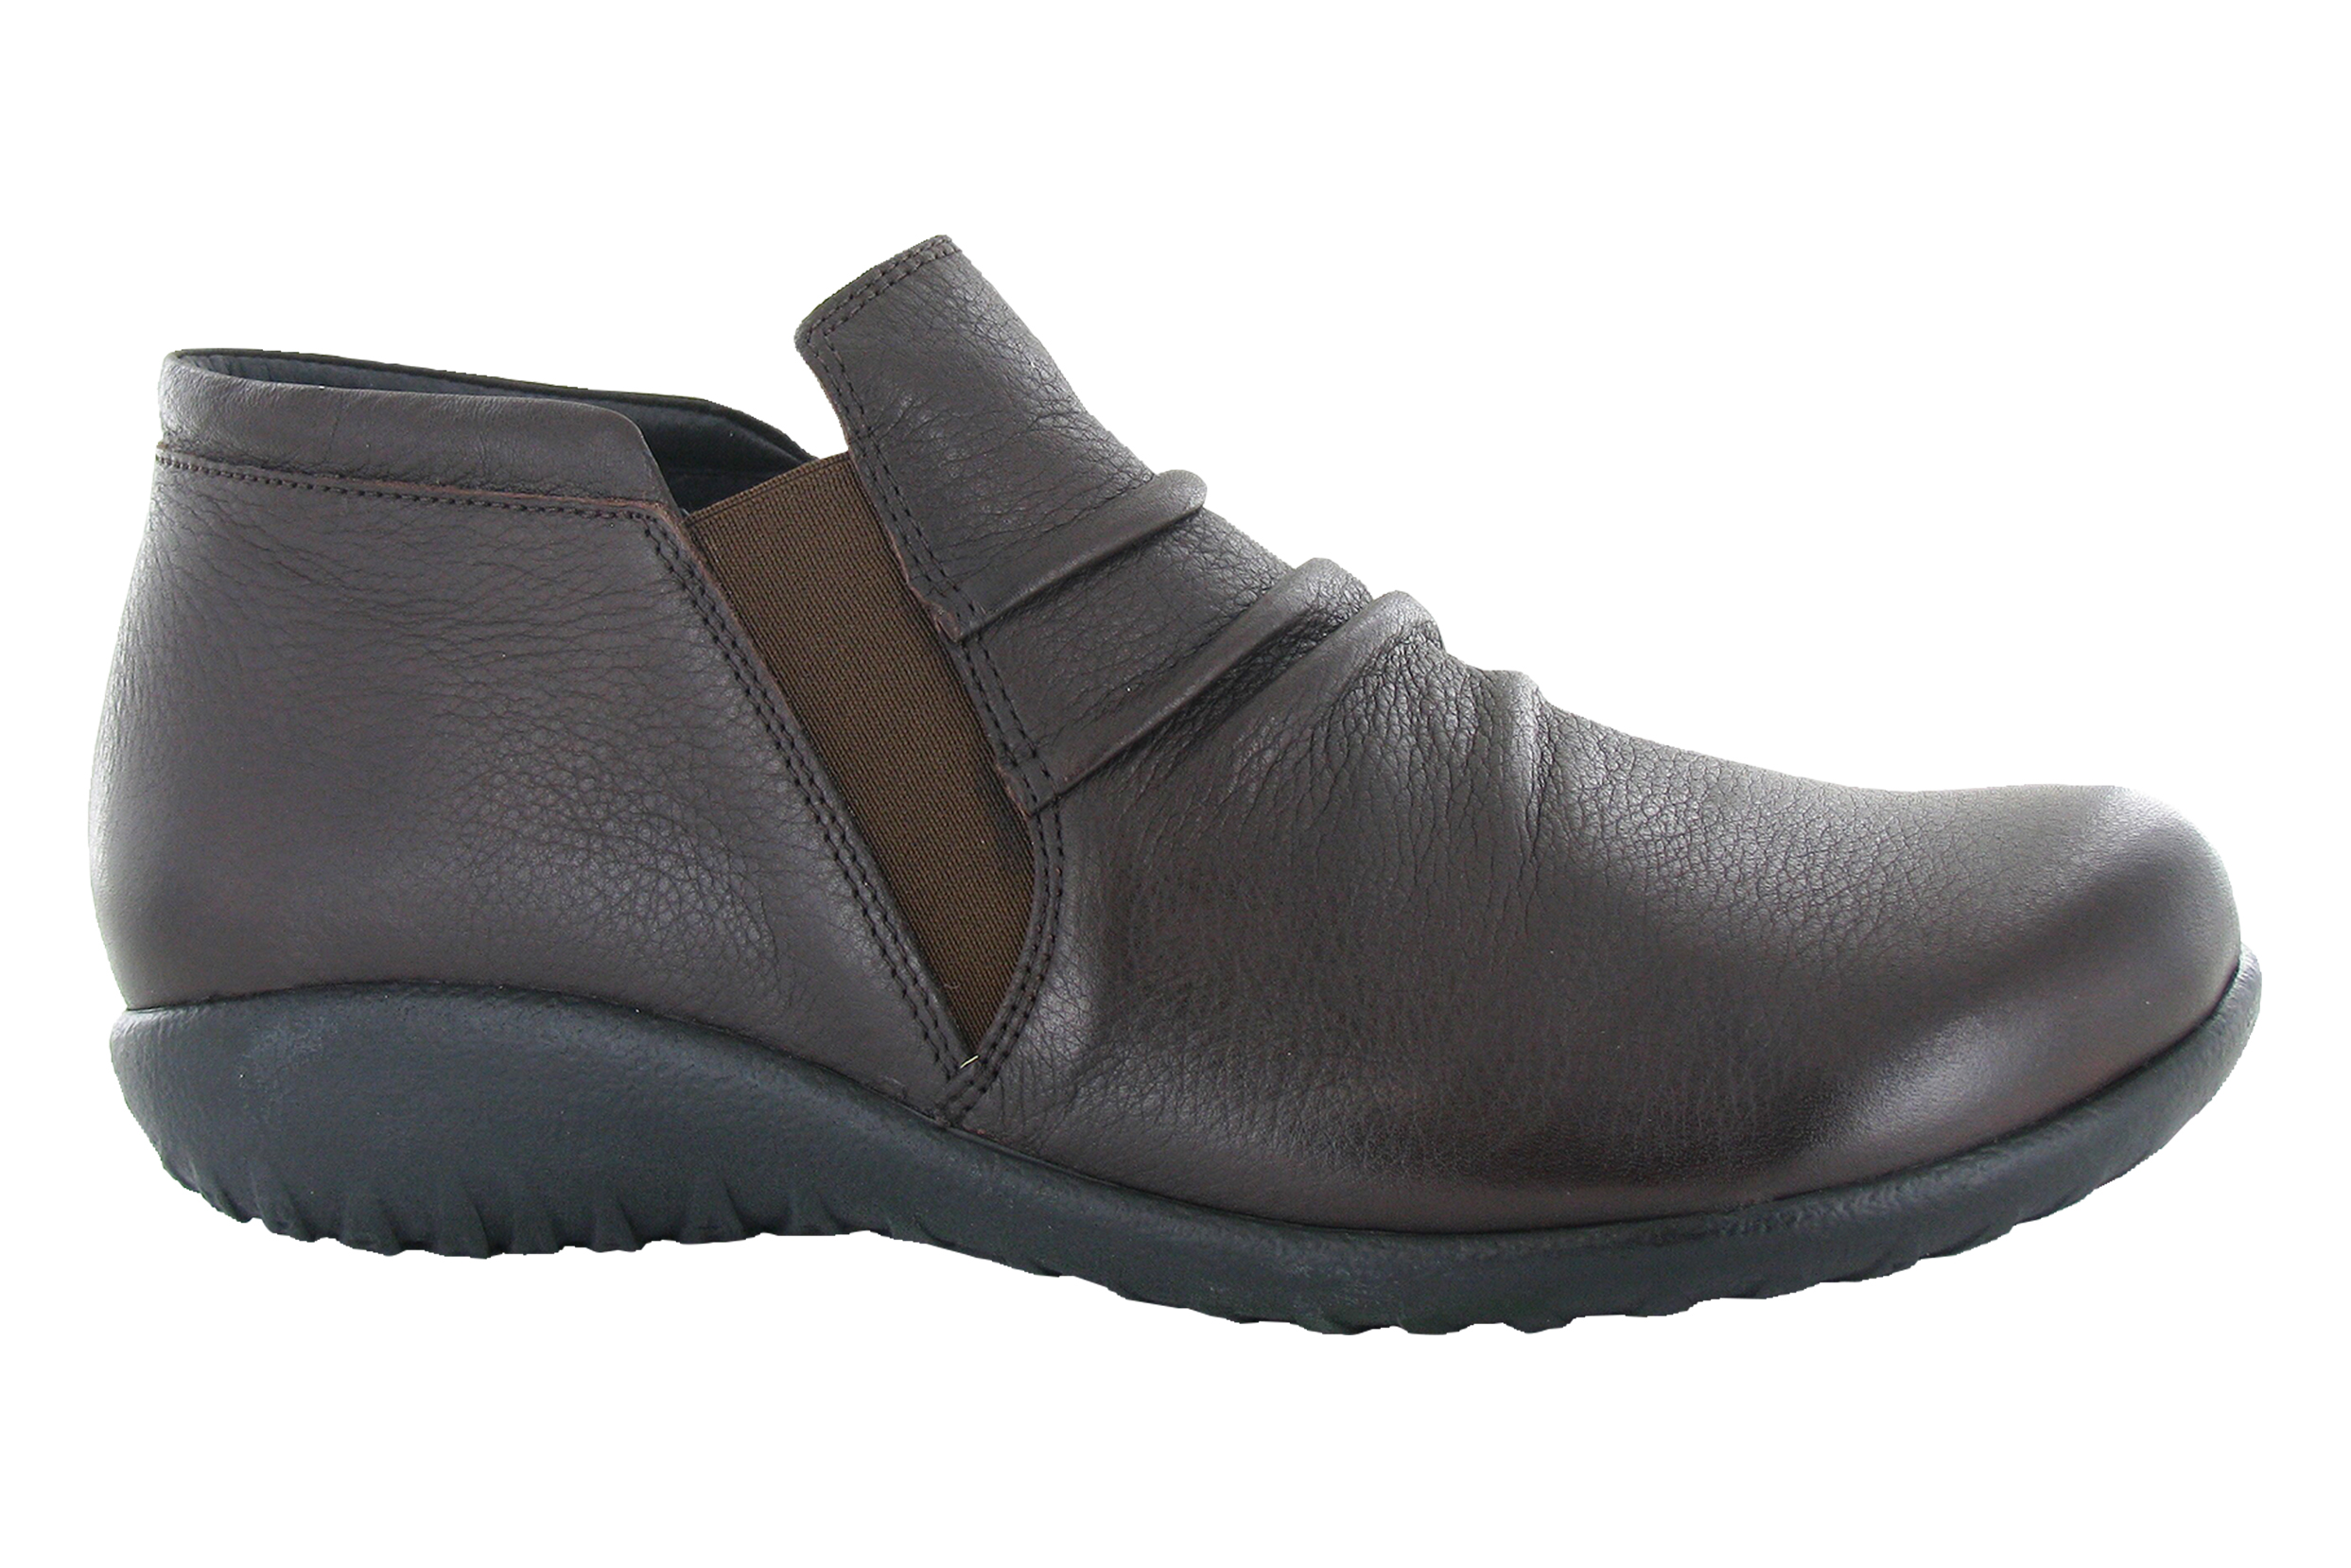 Sandals, Shoes, Boots \u0026 More | NAOT